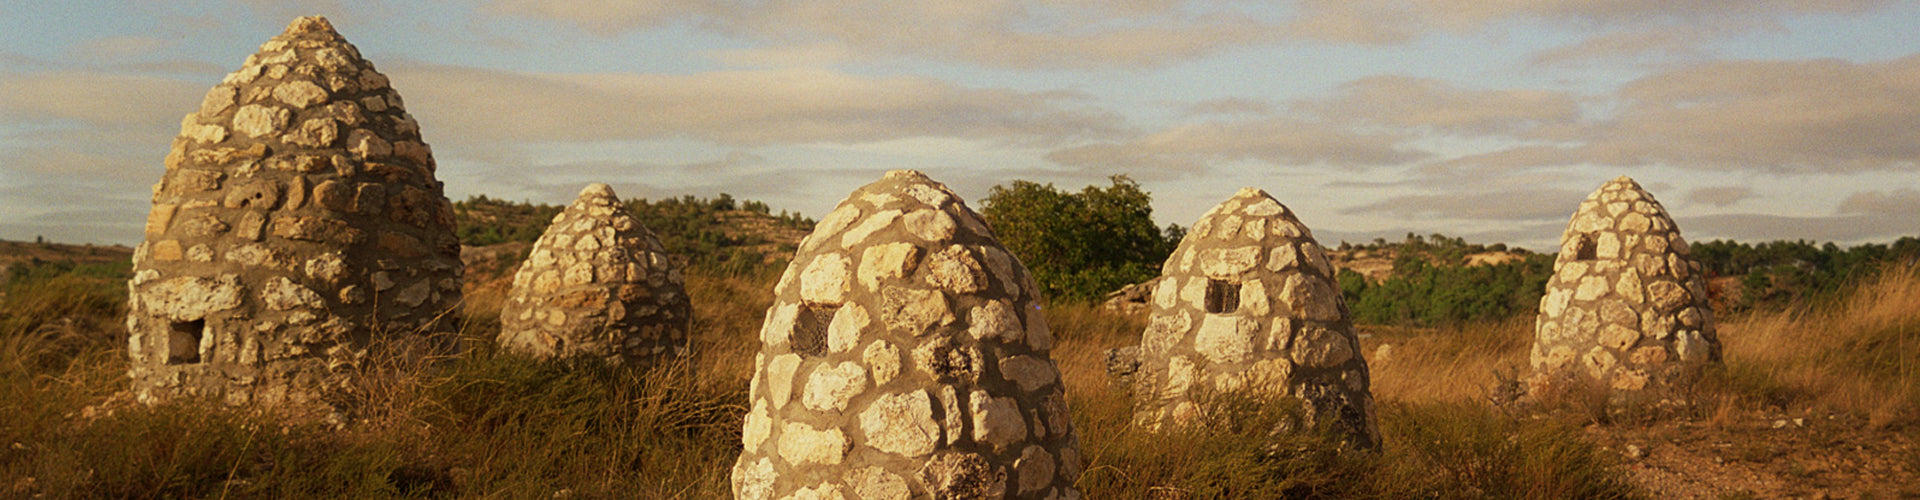 Traditional stone huts in Ribera del Duero Vineyards